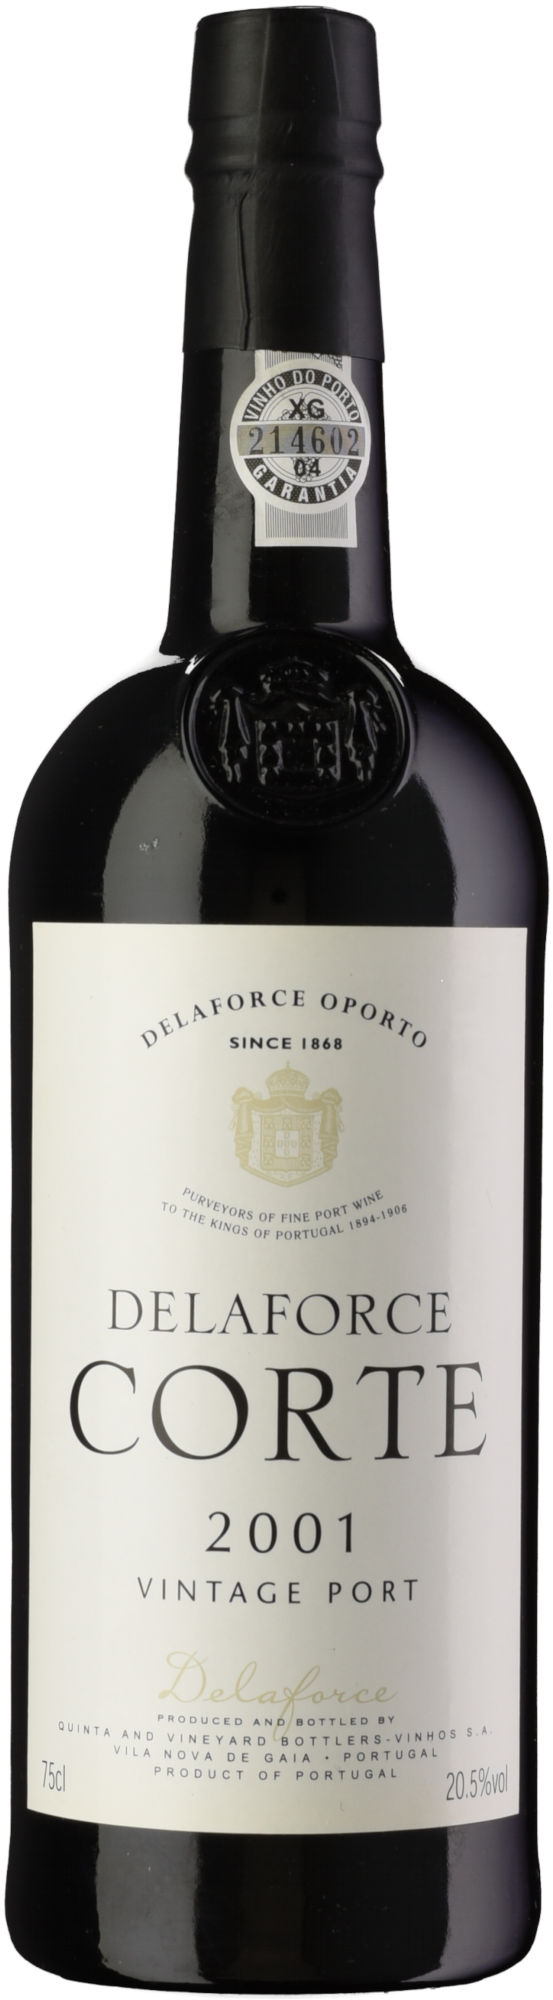 Delaforce-Corte-Vintage-Port-2001